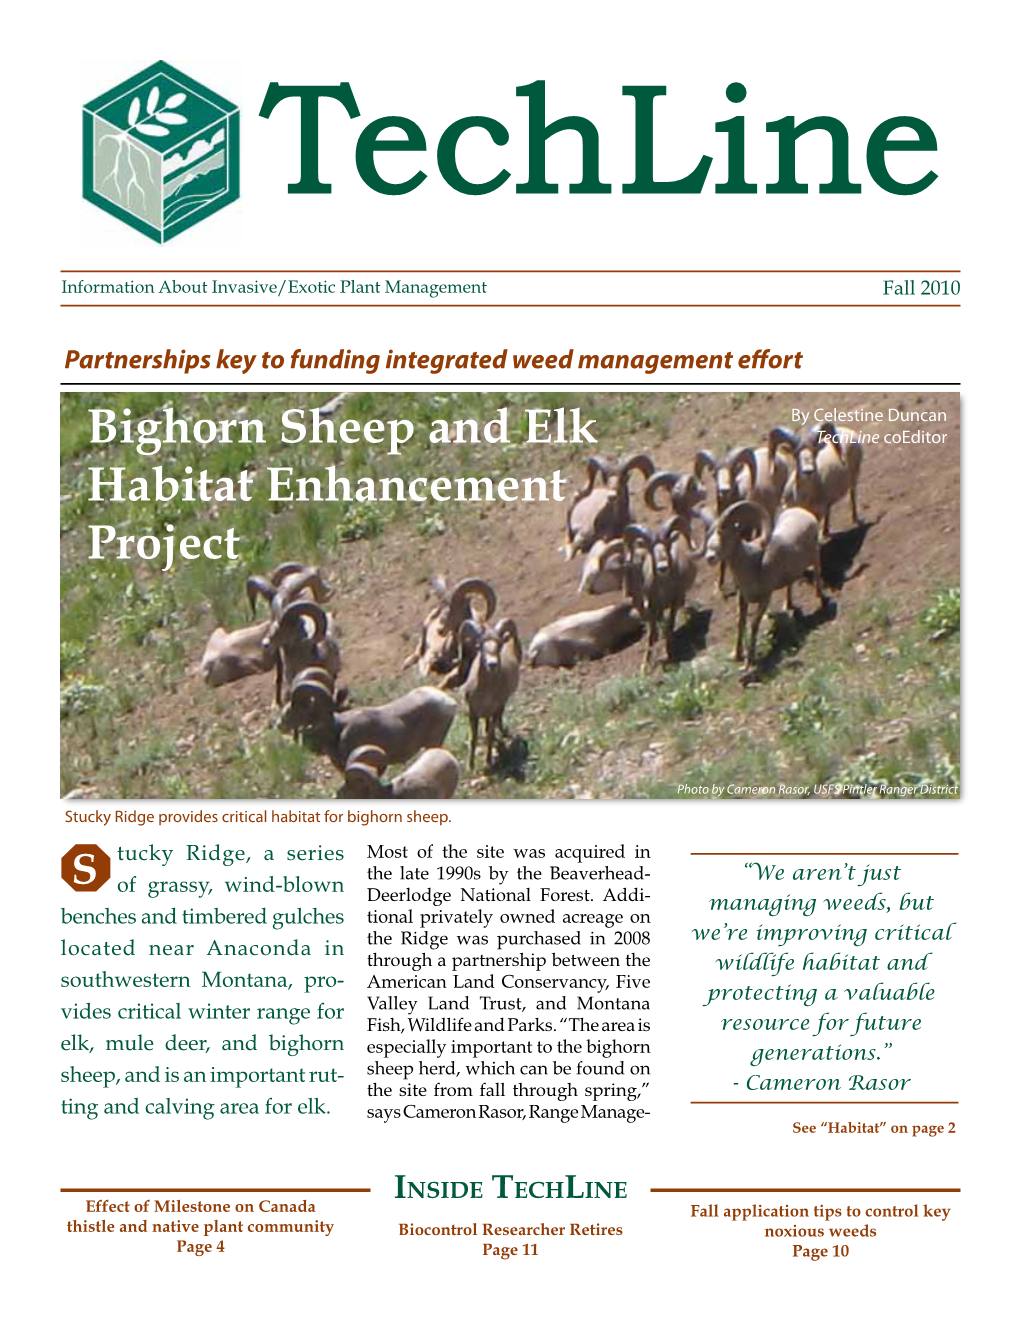 Bighorn Sheep and Elk Habitat Enhancement Project